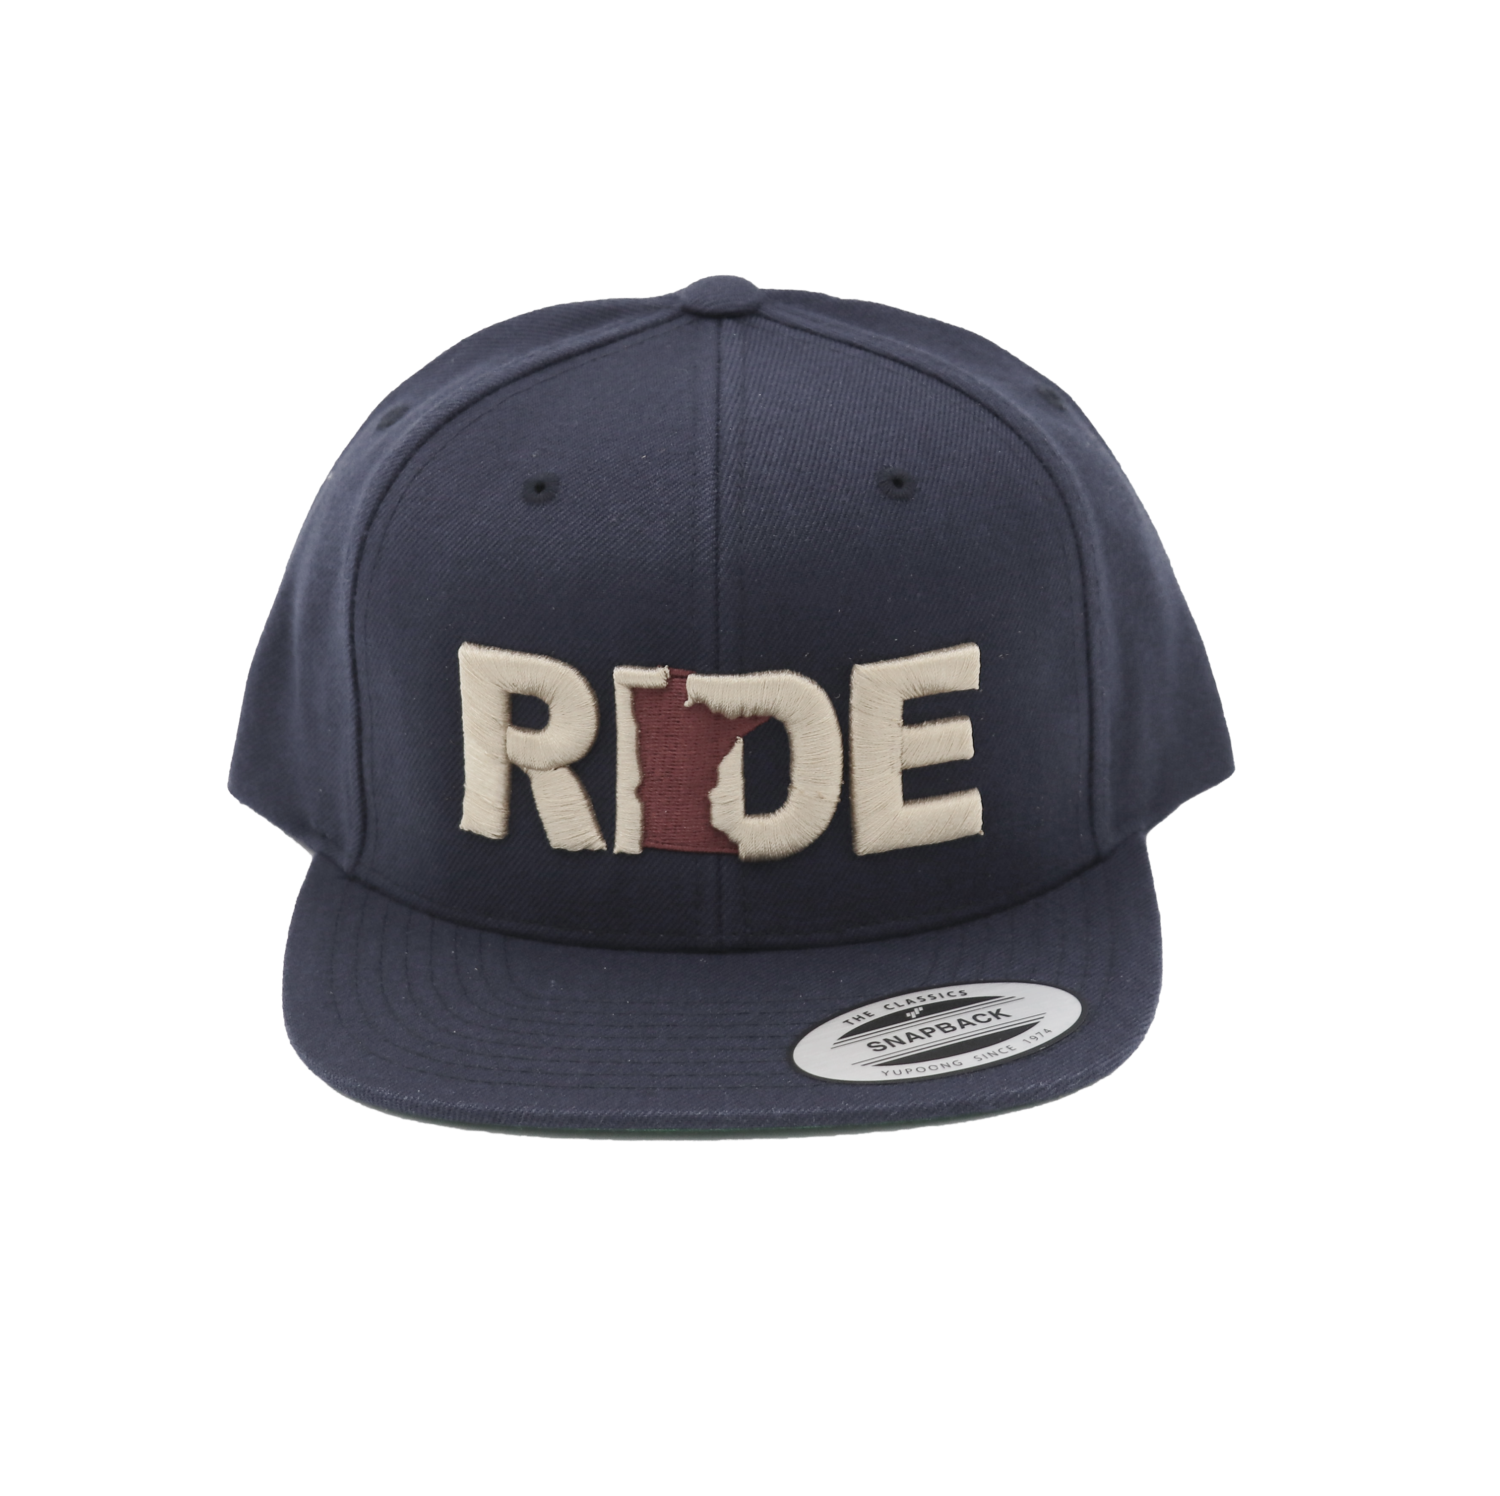 Ride Minnesota Classic Embroidered Snapback Flat Brim Hat Navy/Burgundy/Tan